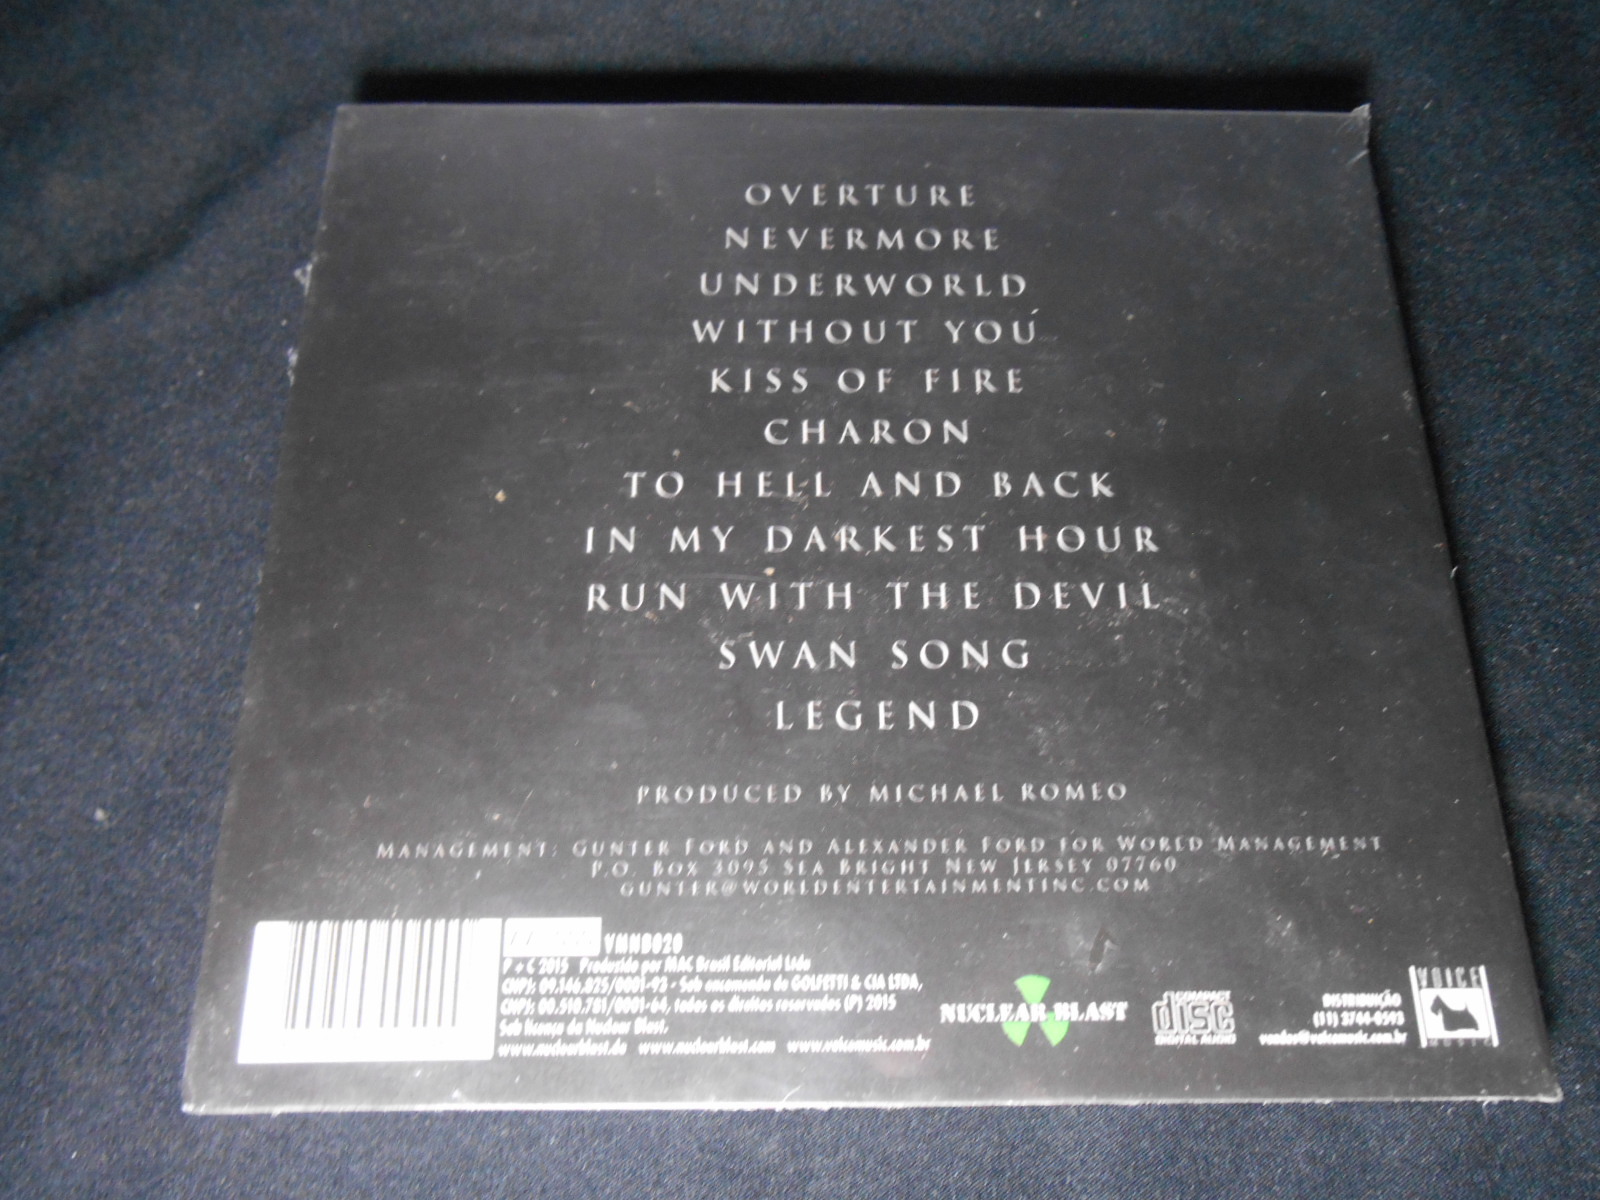 CD - Symphony X - Underworld (Digipack)